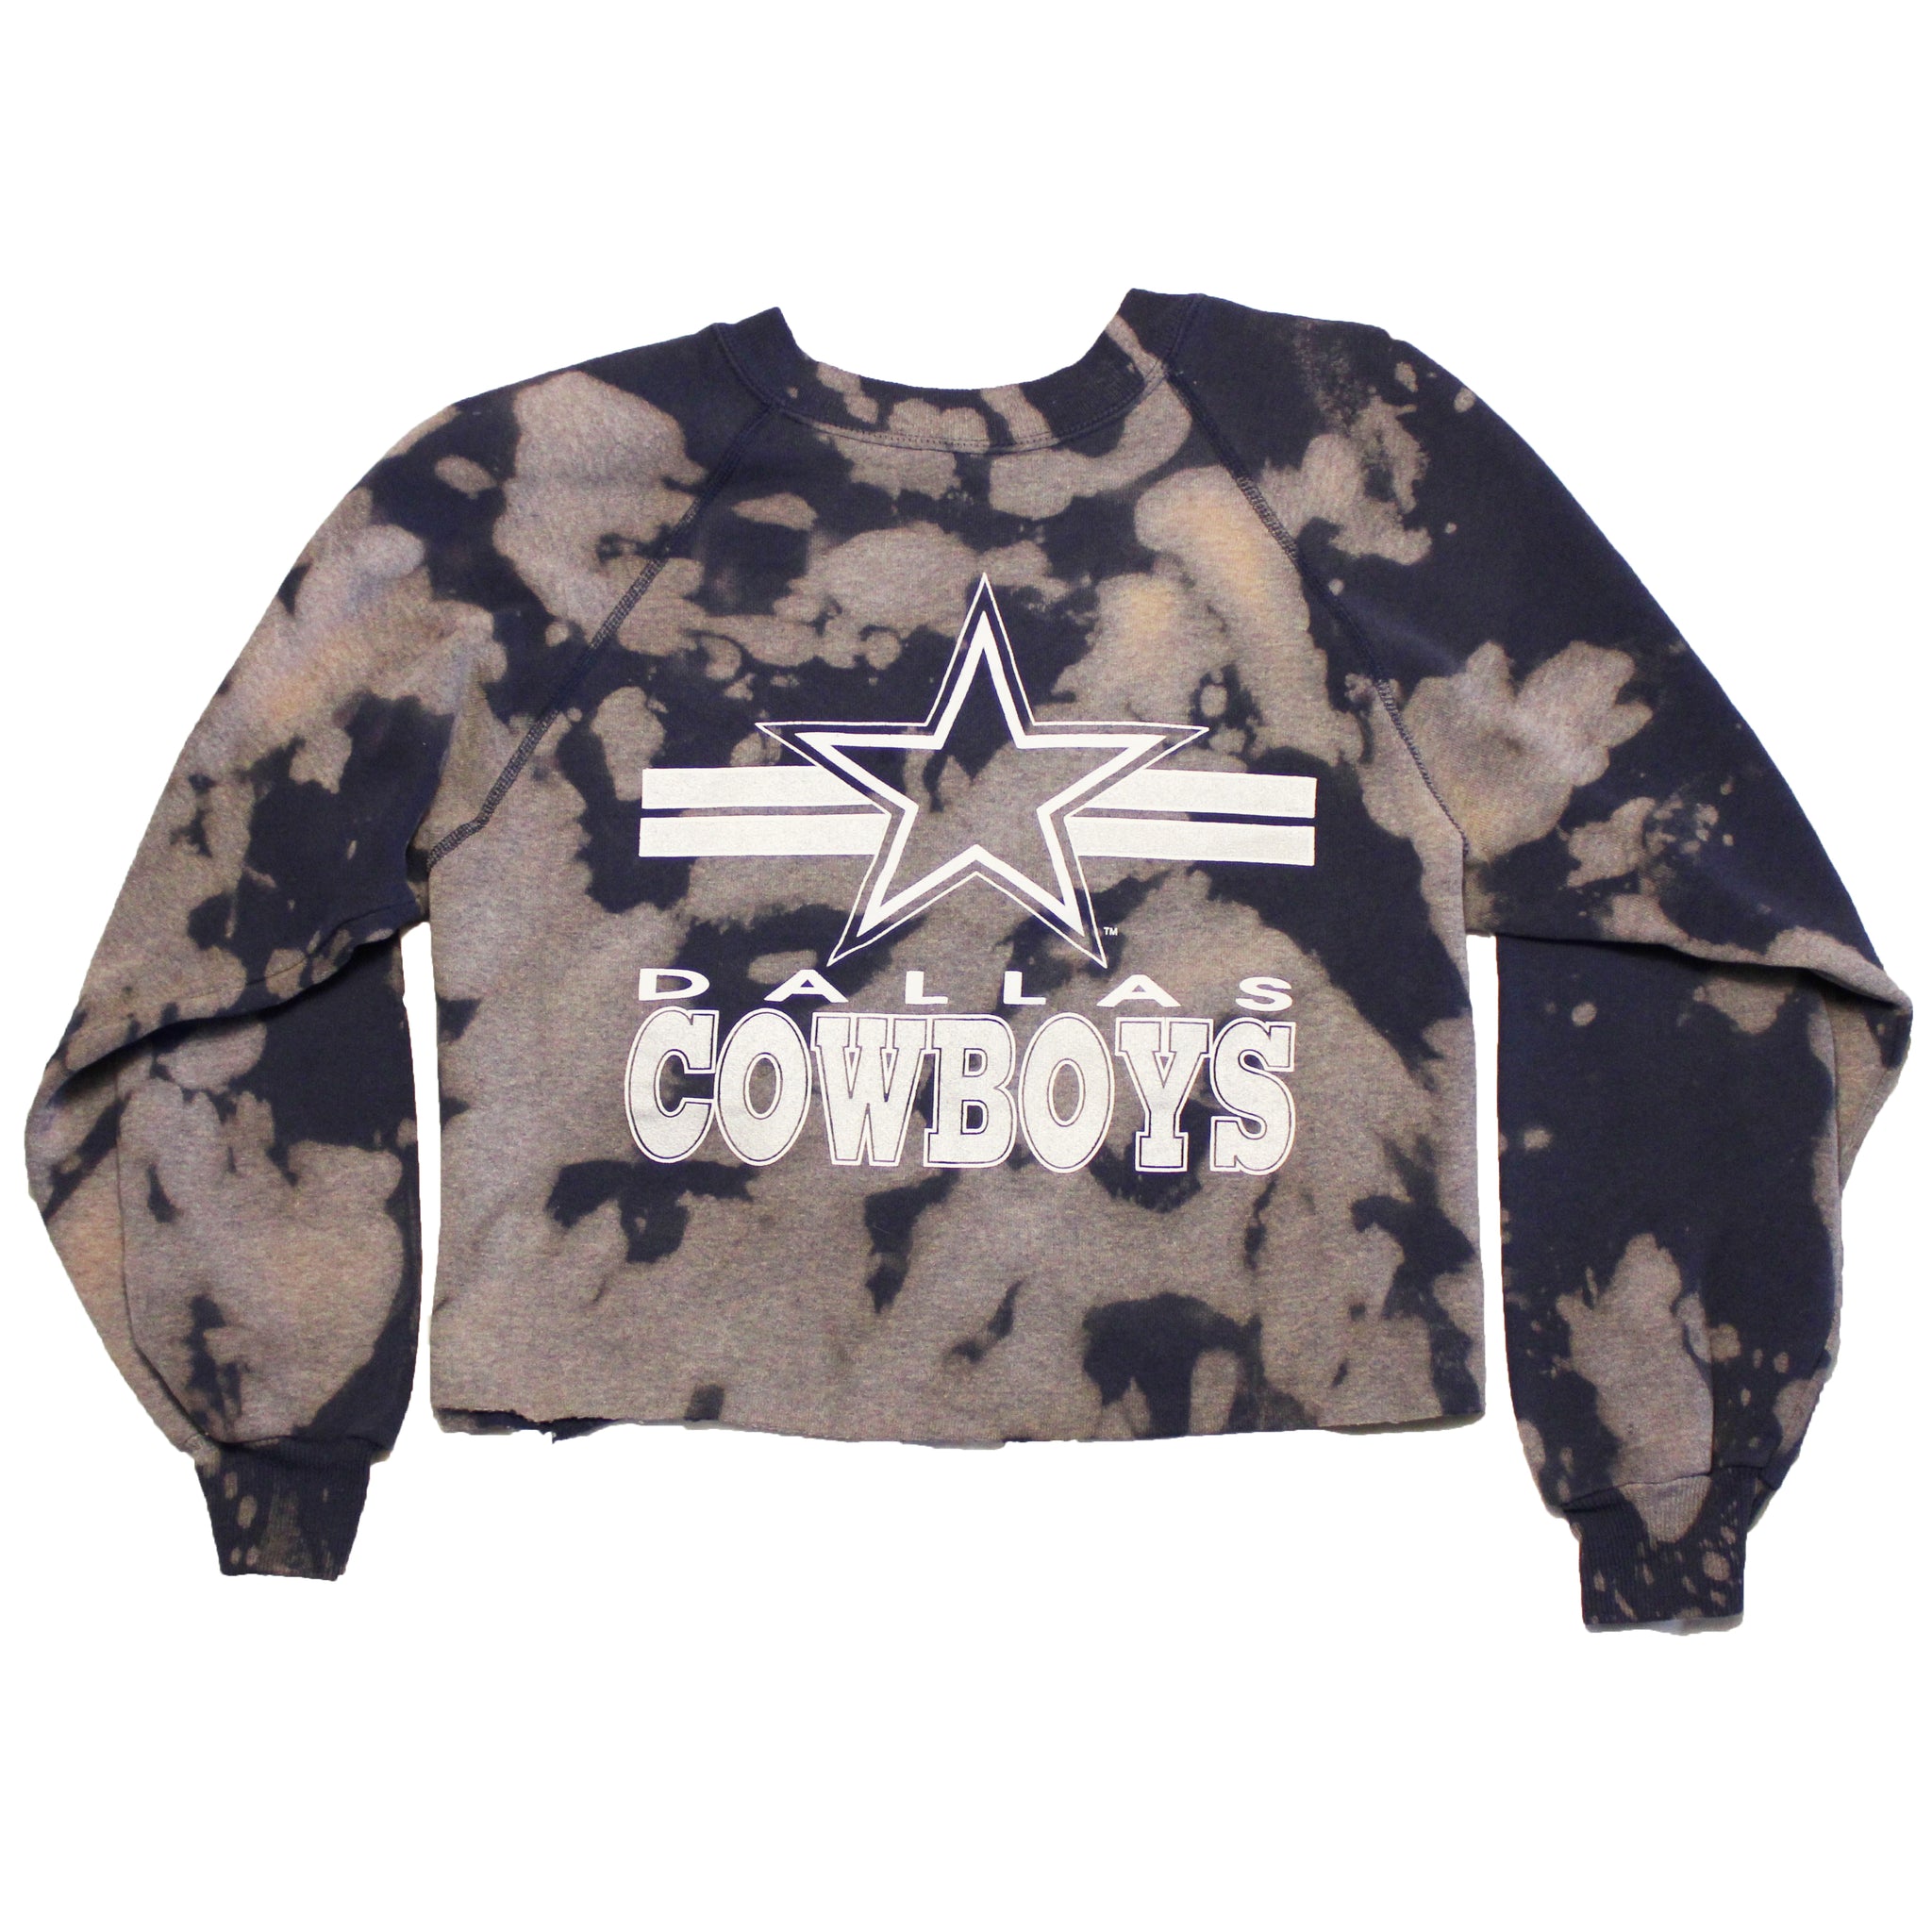 Dallas Texas Cowboys Sweatshirt - Small